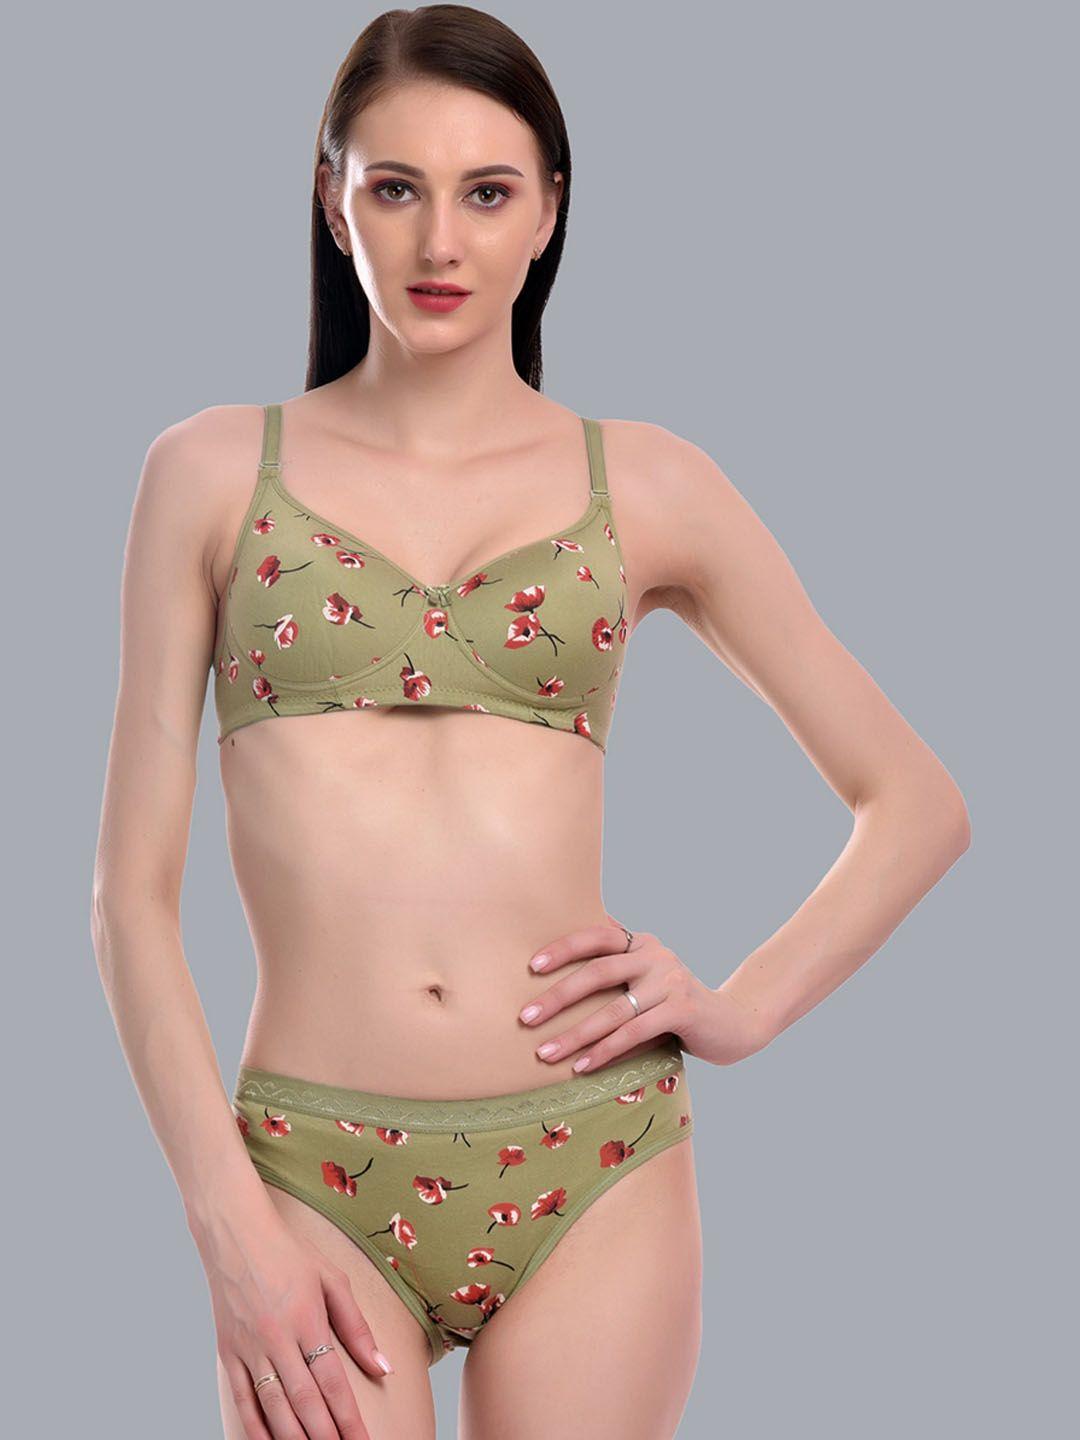 extoes printed cotton lingerie set blossom-lingerie set-grn-30